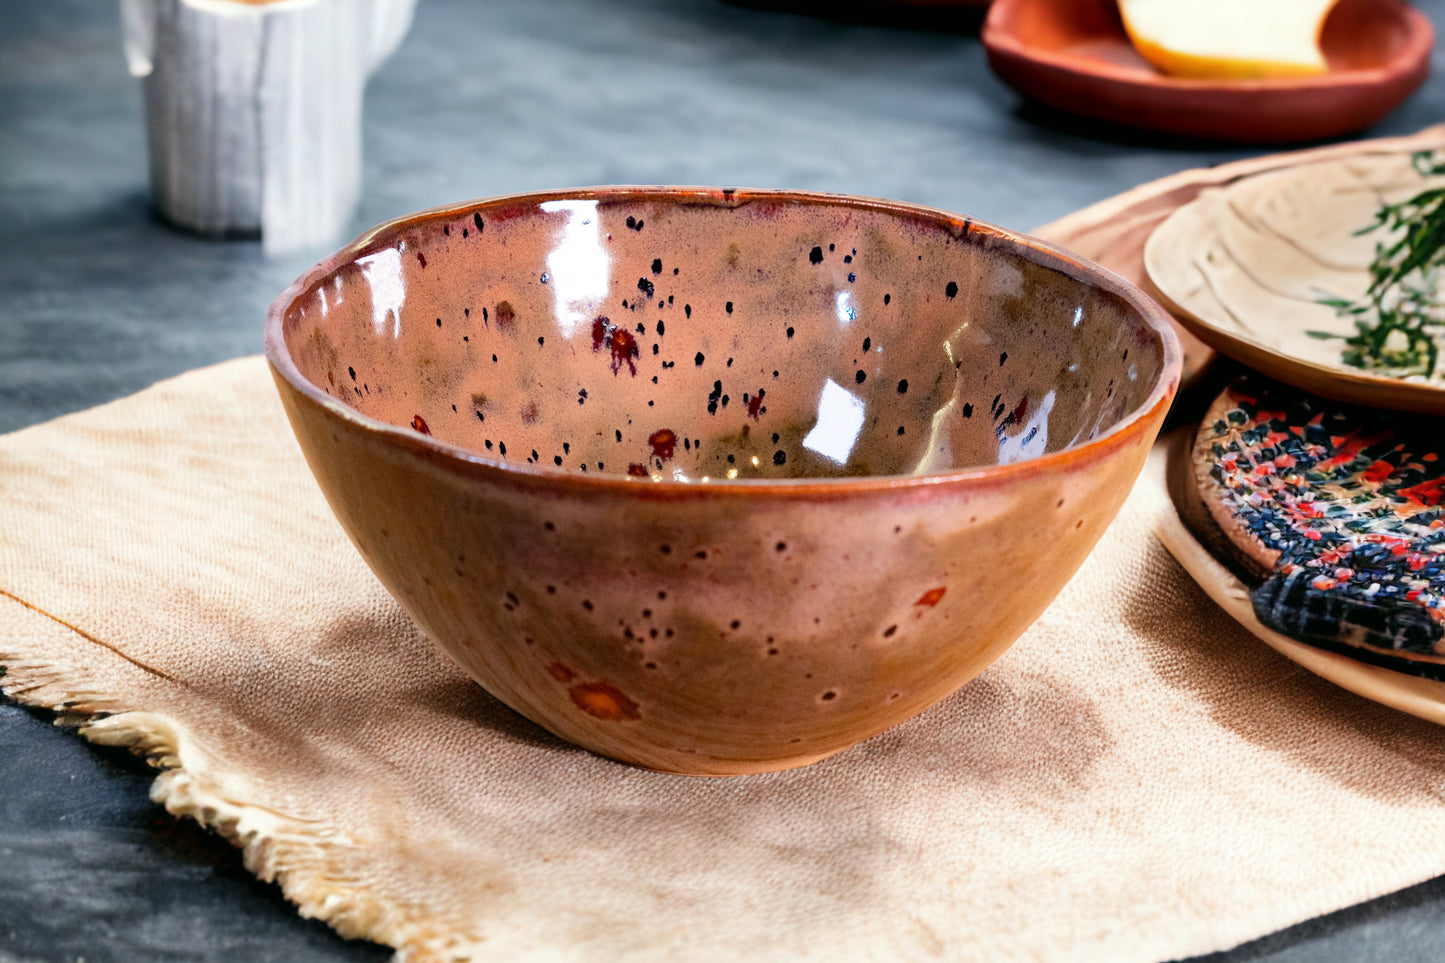 Handmade ceramic bowl | Handmade by FeSendra | 15x7 cm